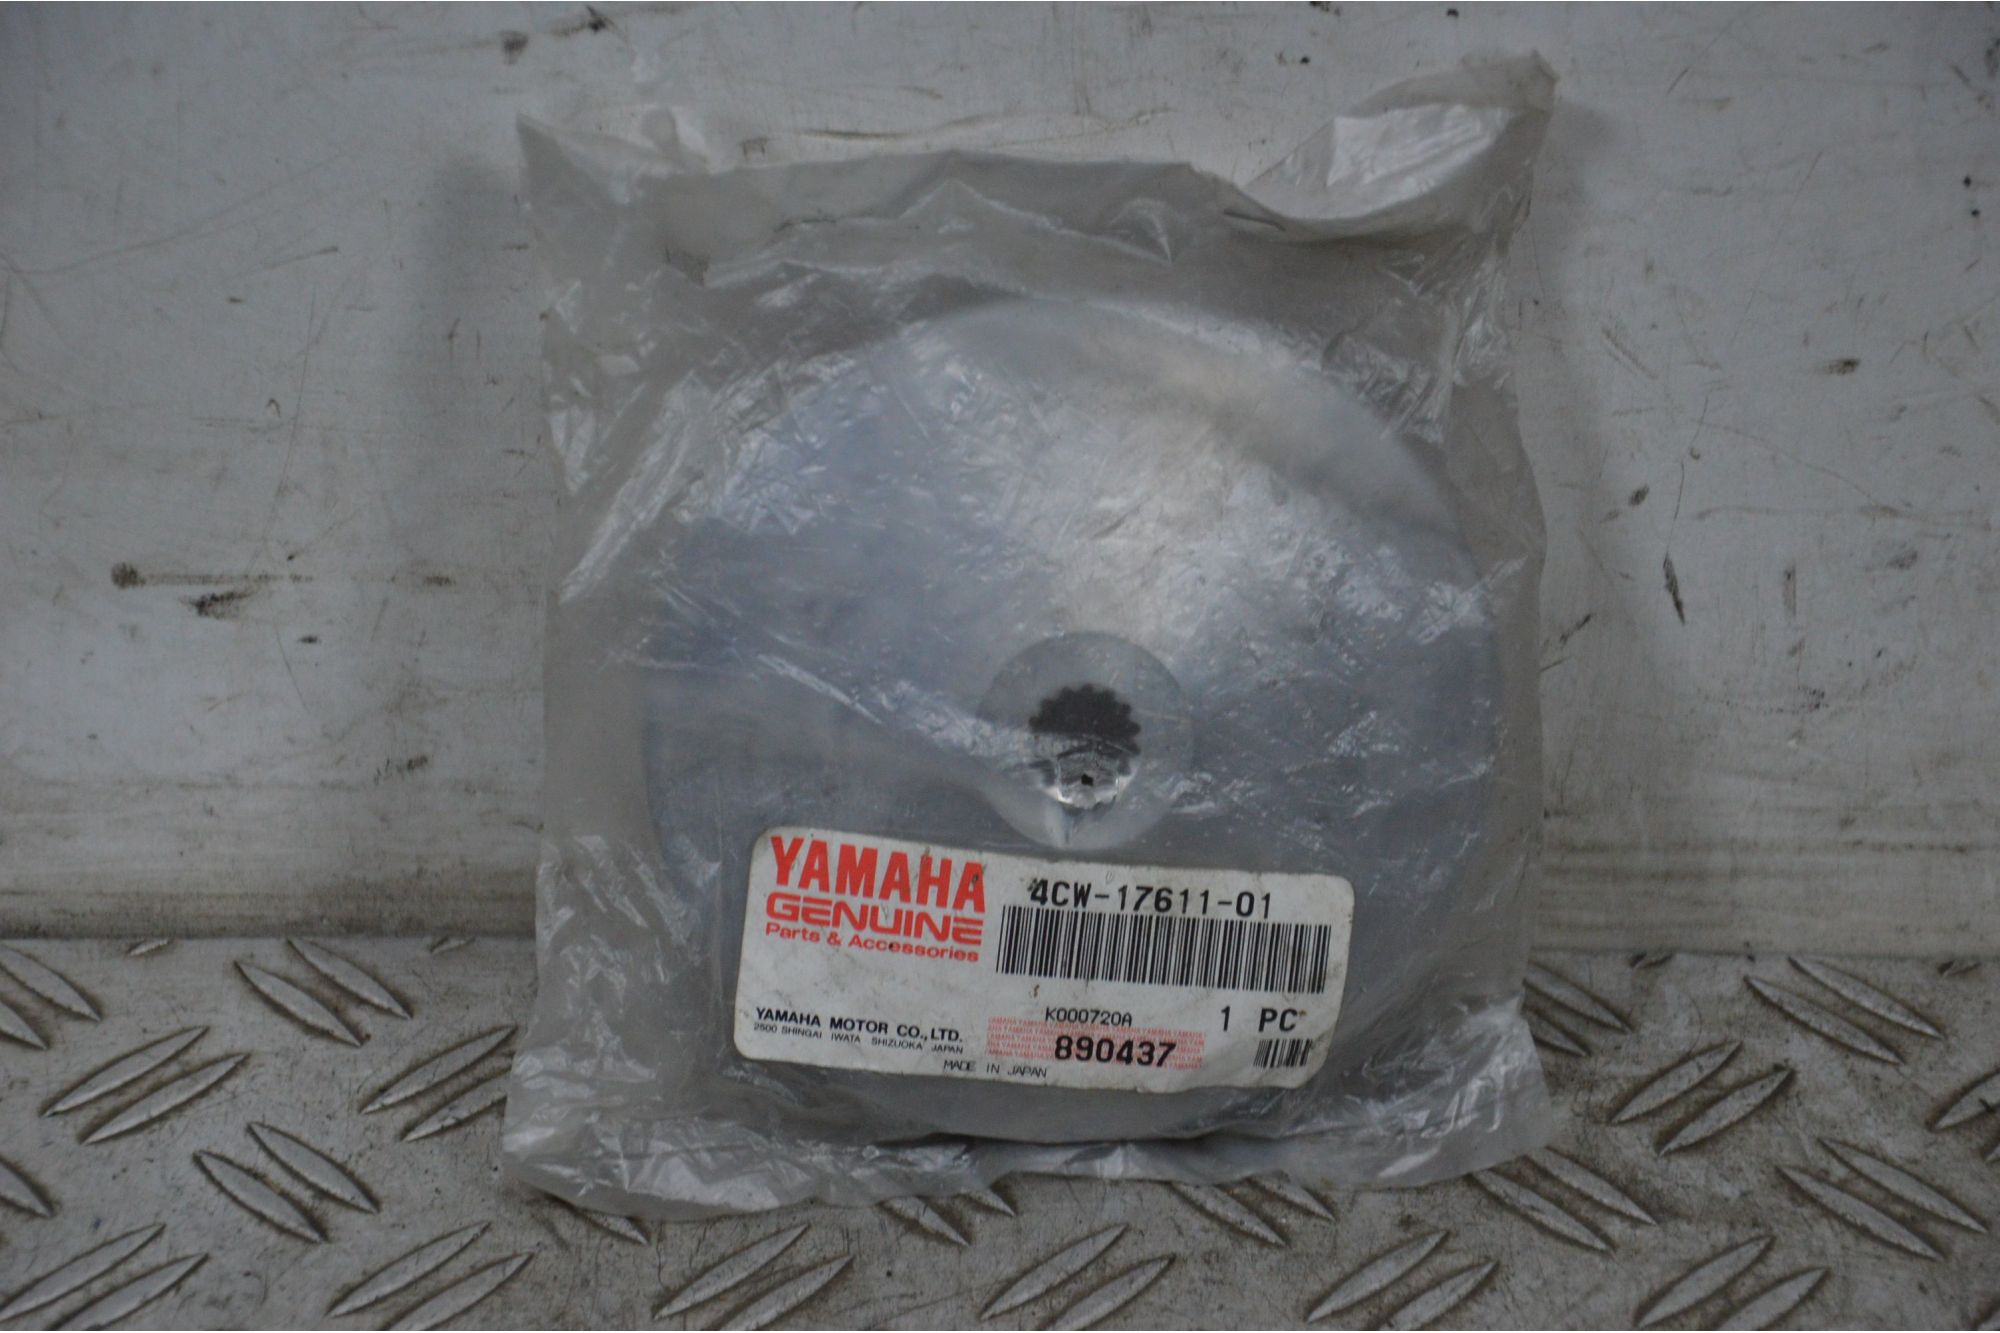 Semipuleggia Variatore Yamaha Cygnus/MBK Flame 125 Dal 2006 al 2013 COD CW-17611-01 Fondo Di Magazzino  1705048009051